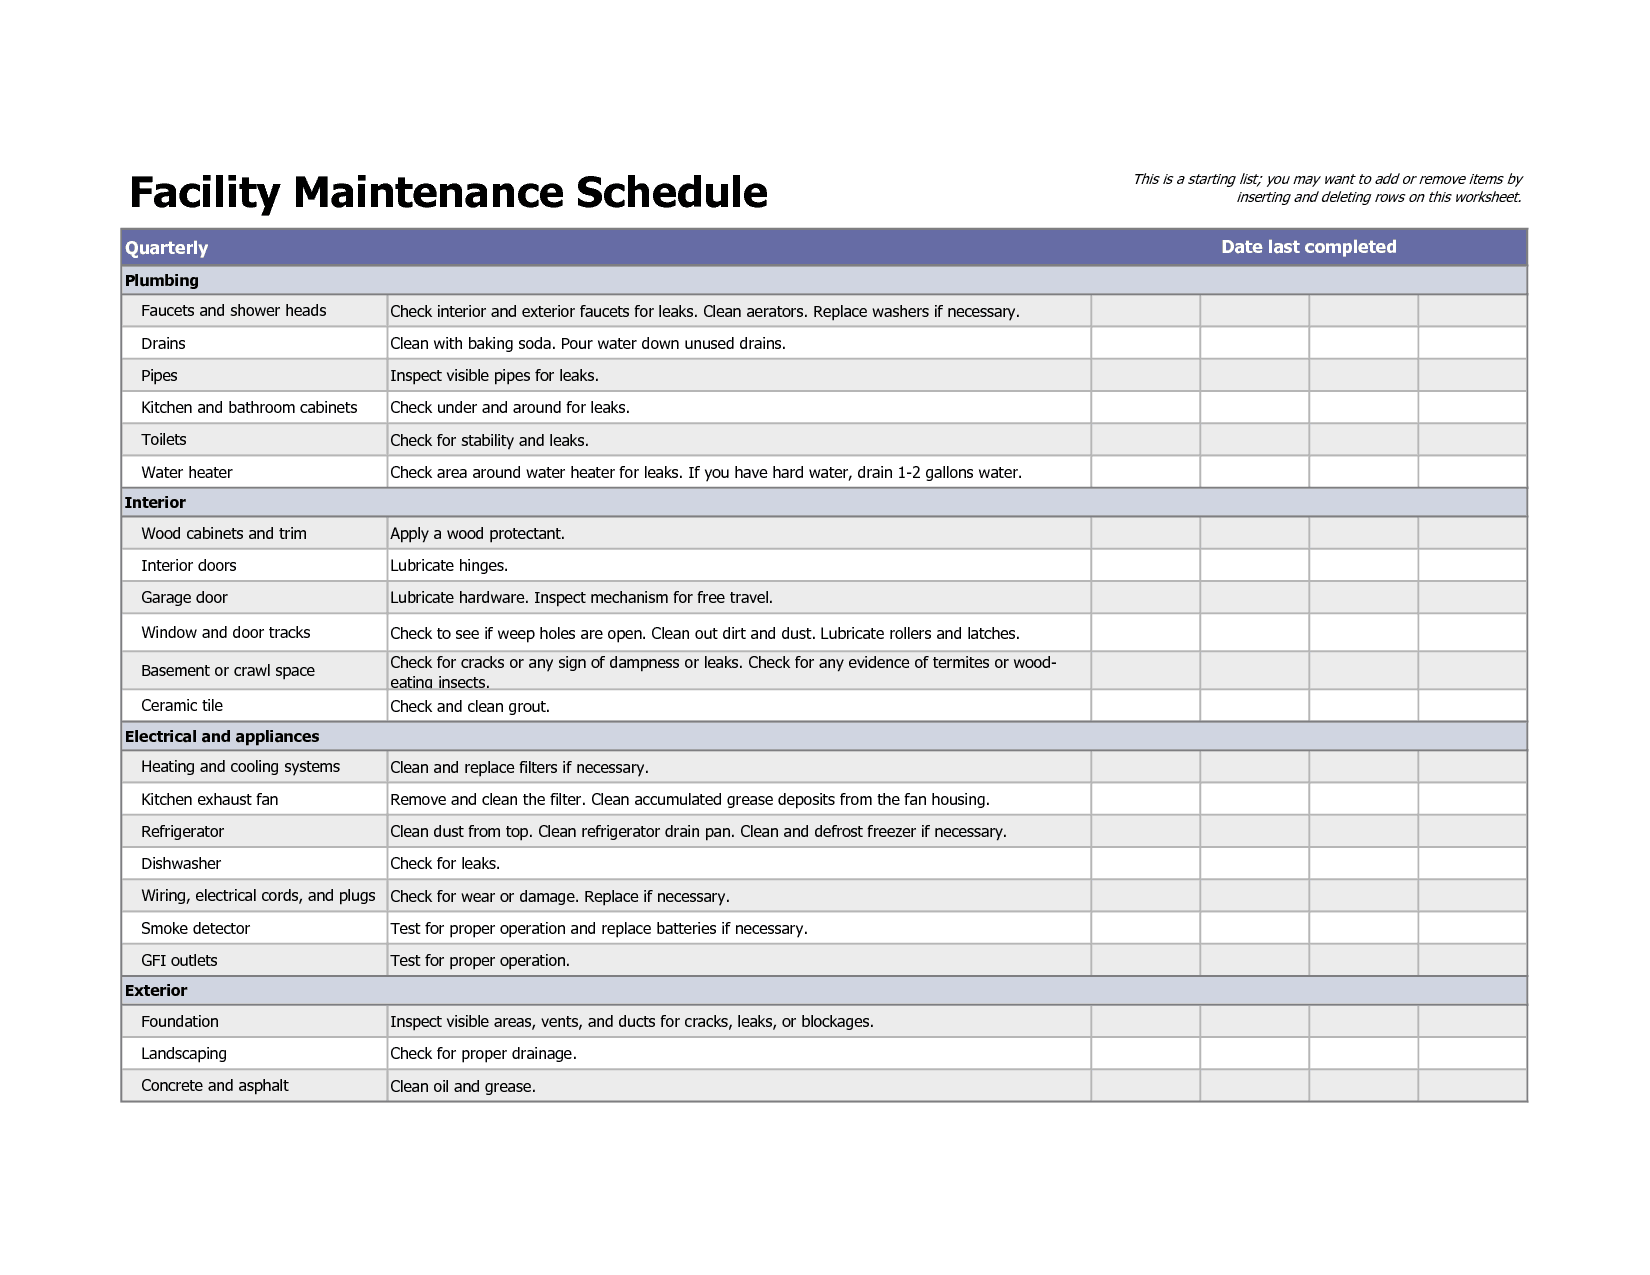 4-facility-maintenance-checklist-templates-excel-xlts